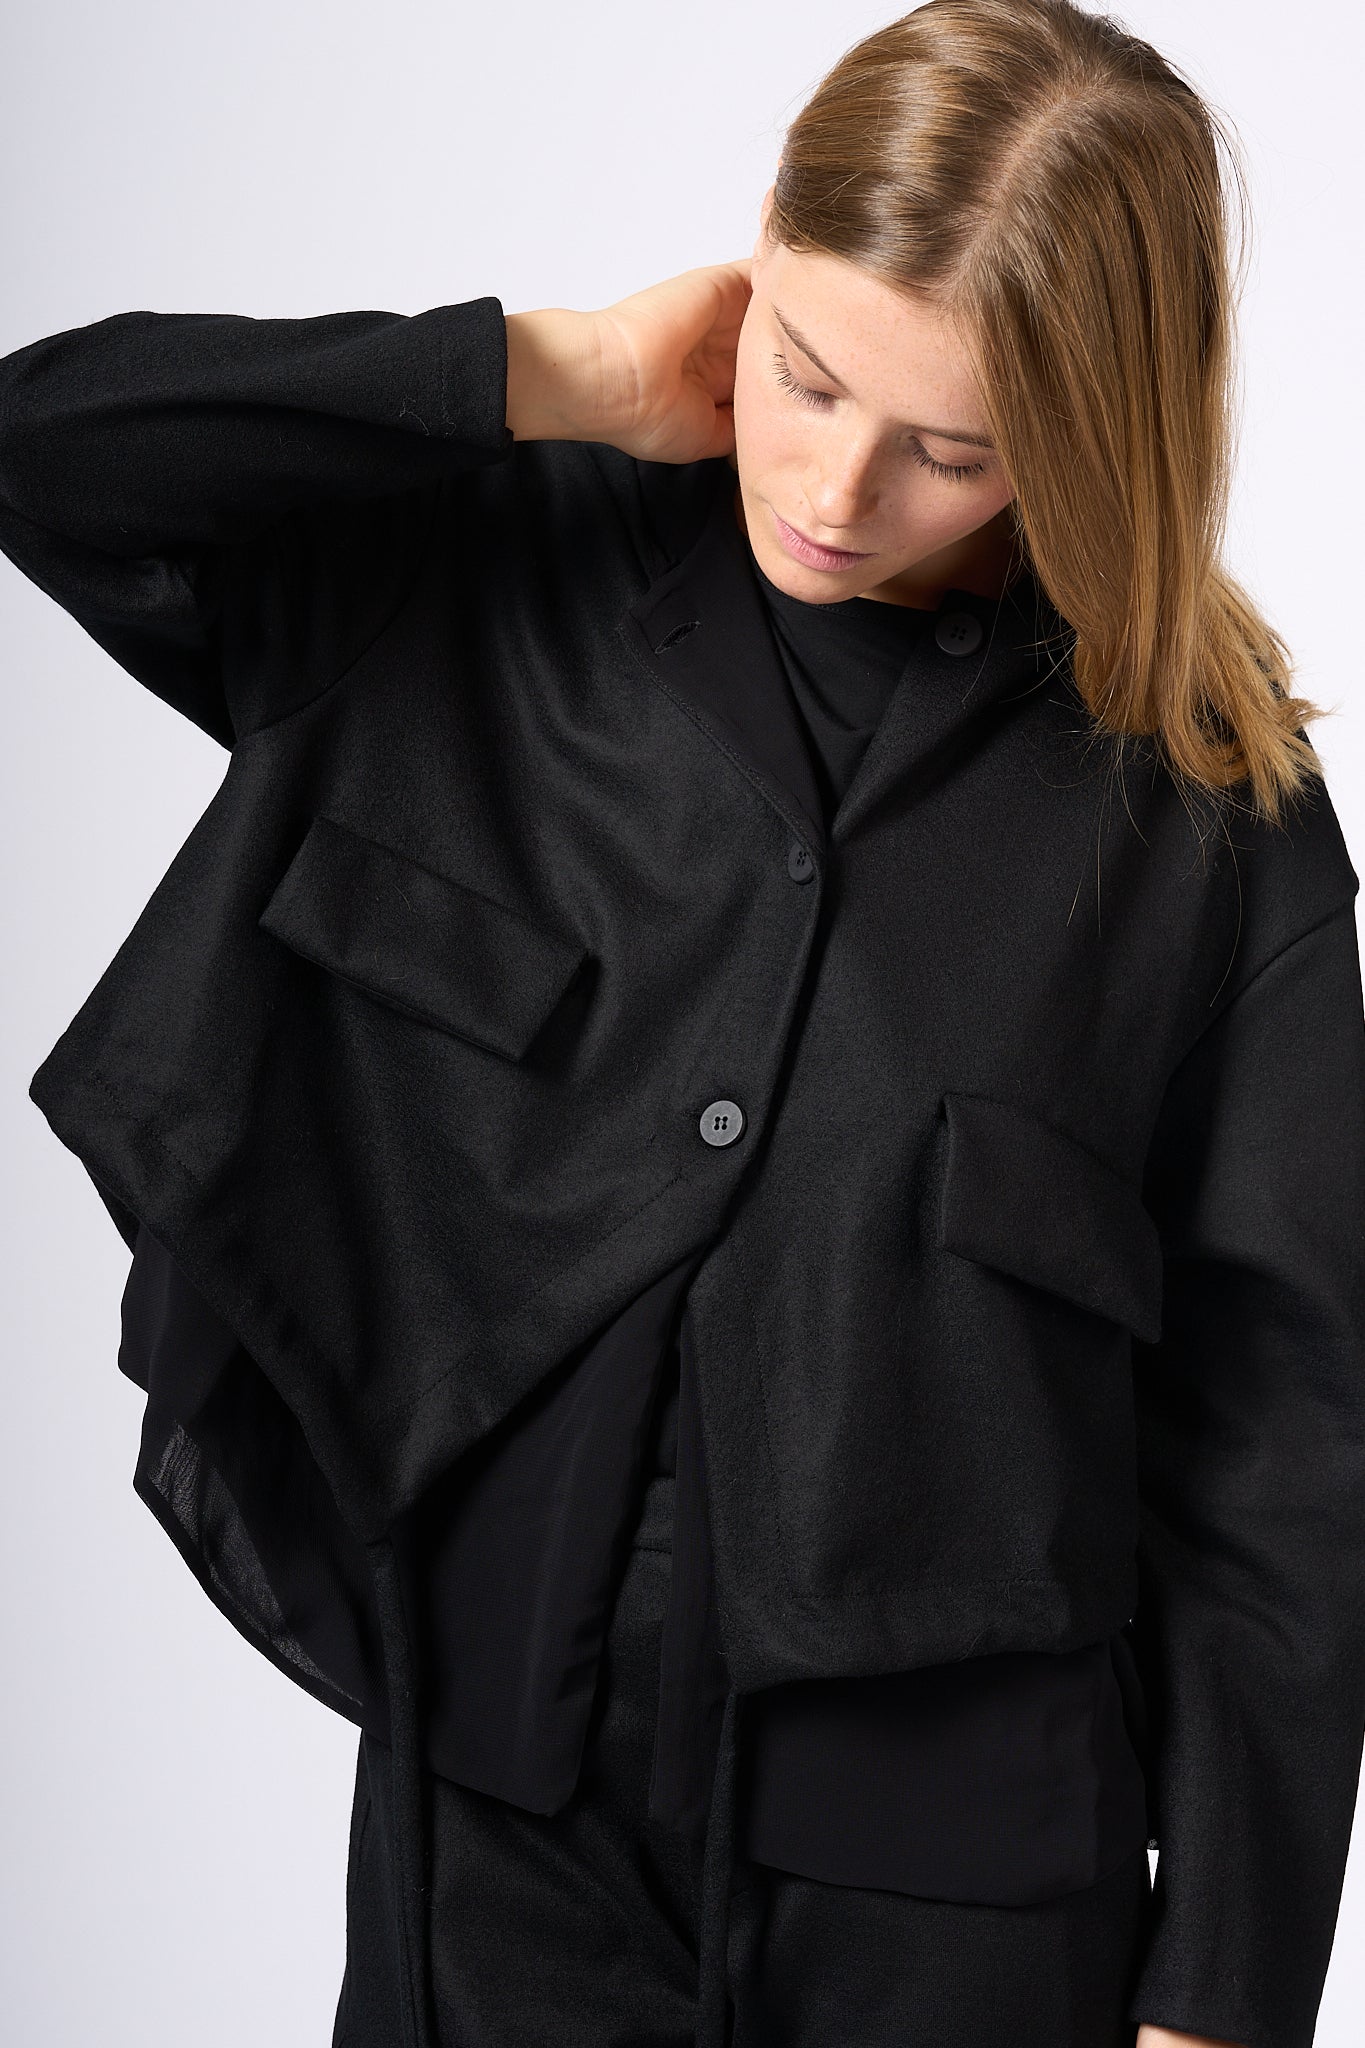 Transit Women's Black Hooded Jacket-2